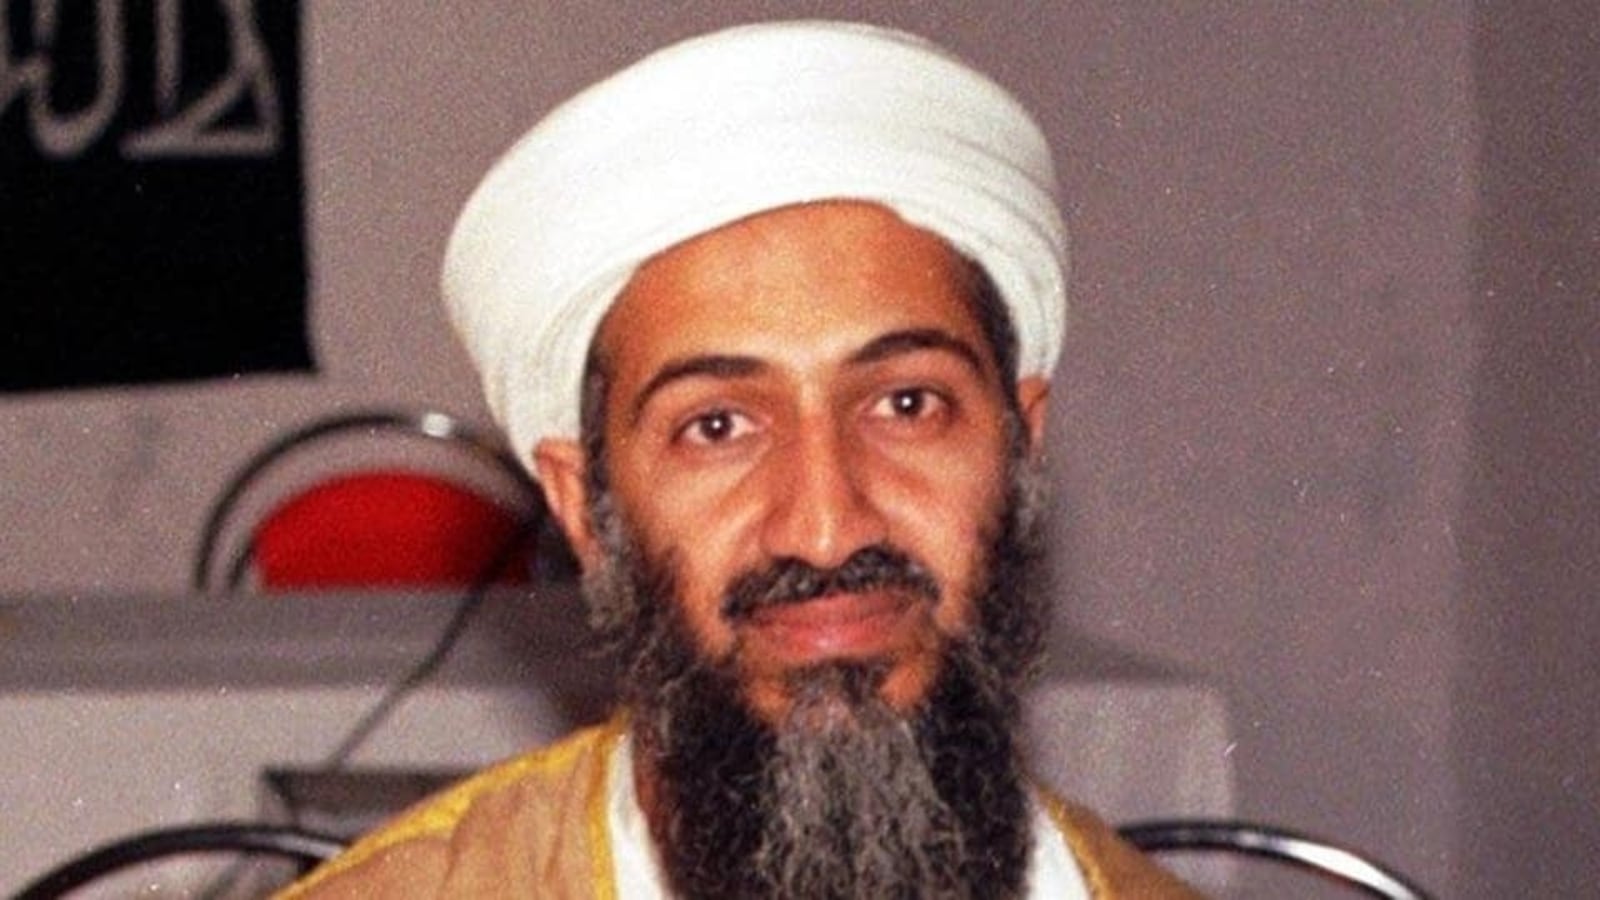 PHOTOS the Life of Osama Bin Laden